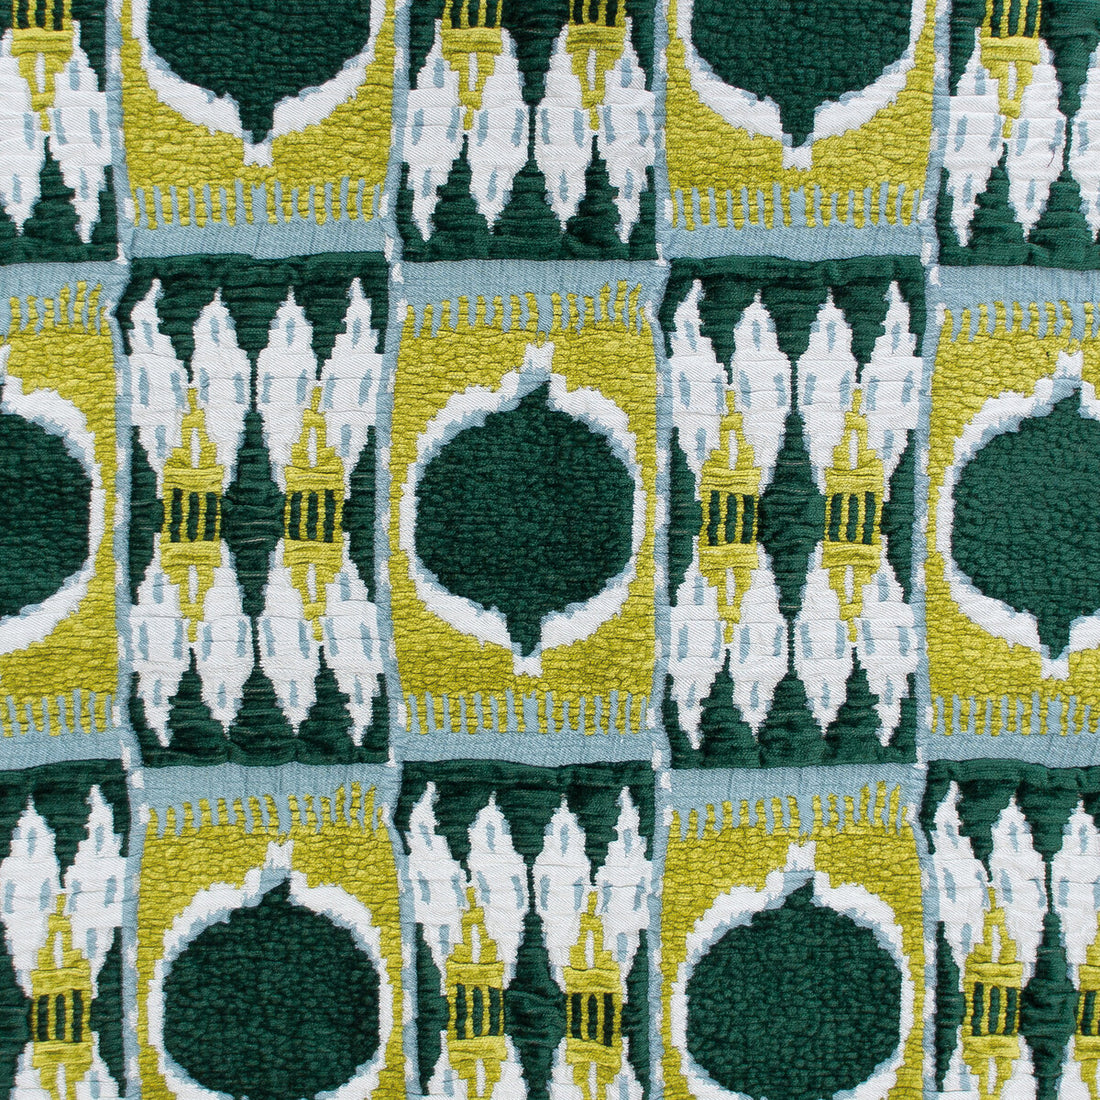 Cuzco fabric in verde color - pattern GDT5571.002.0 - by Gaston y Daniela in the Gaston Nuevo Mundo collection